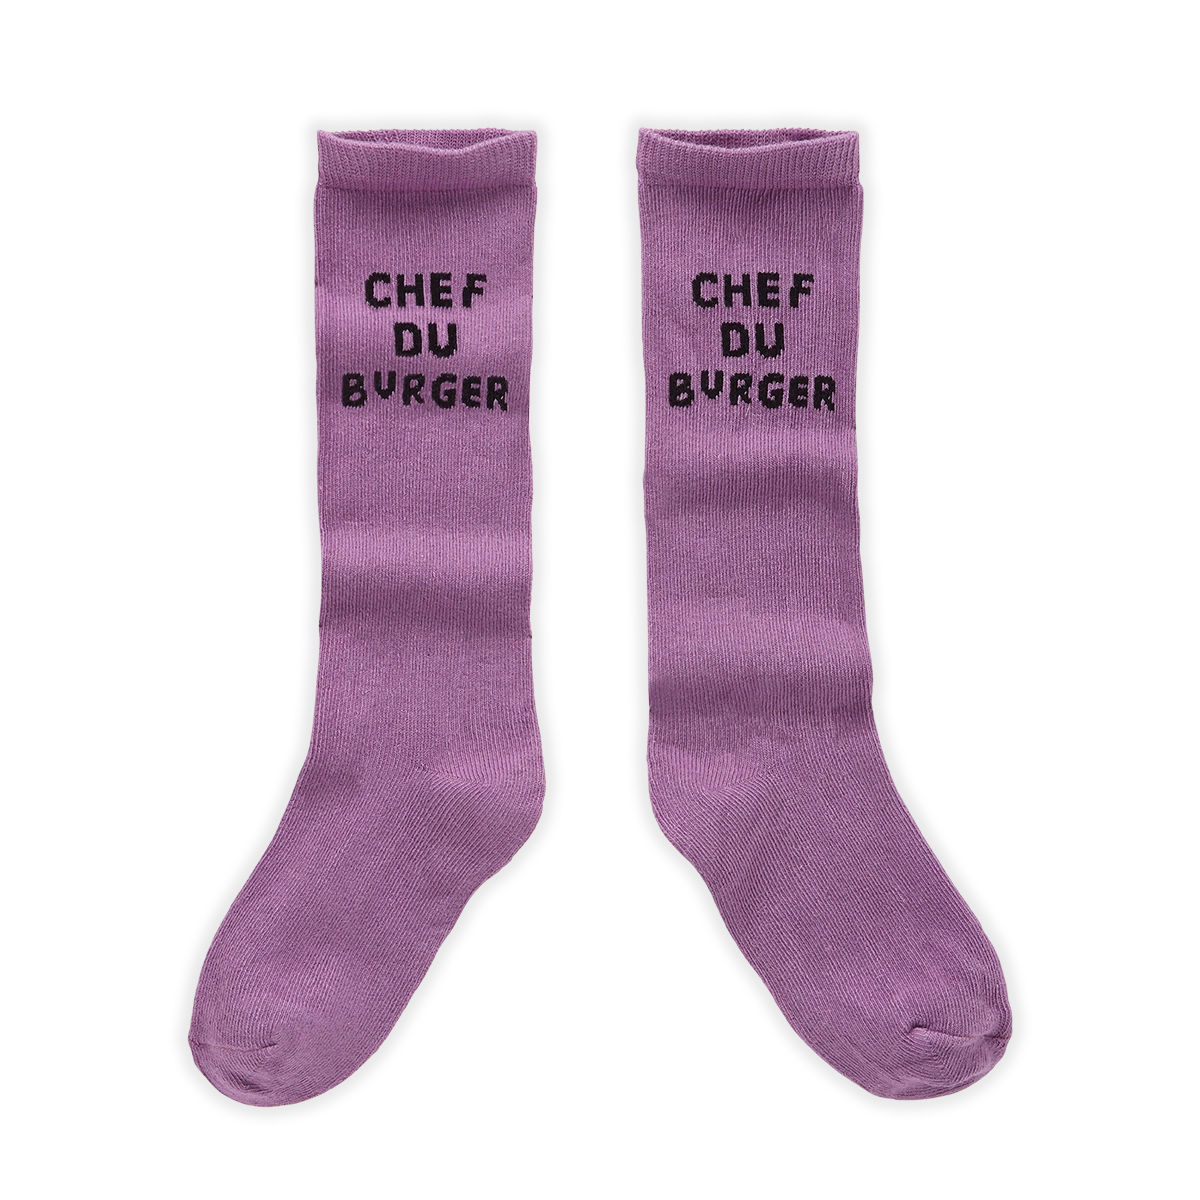 Socks chef du burger purple, Sproet & Sprout